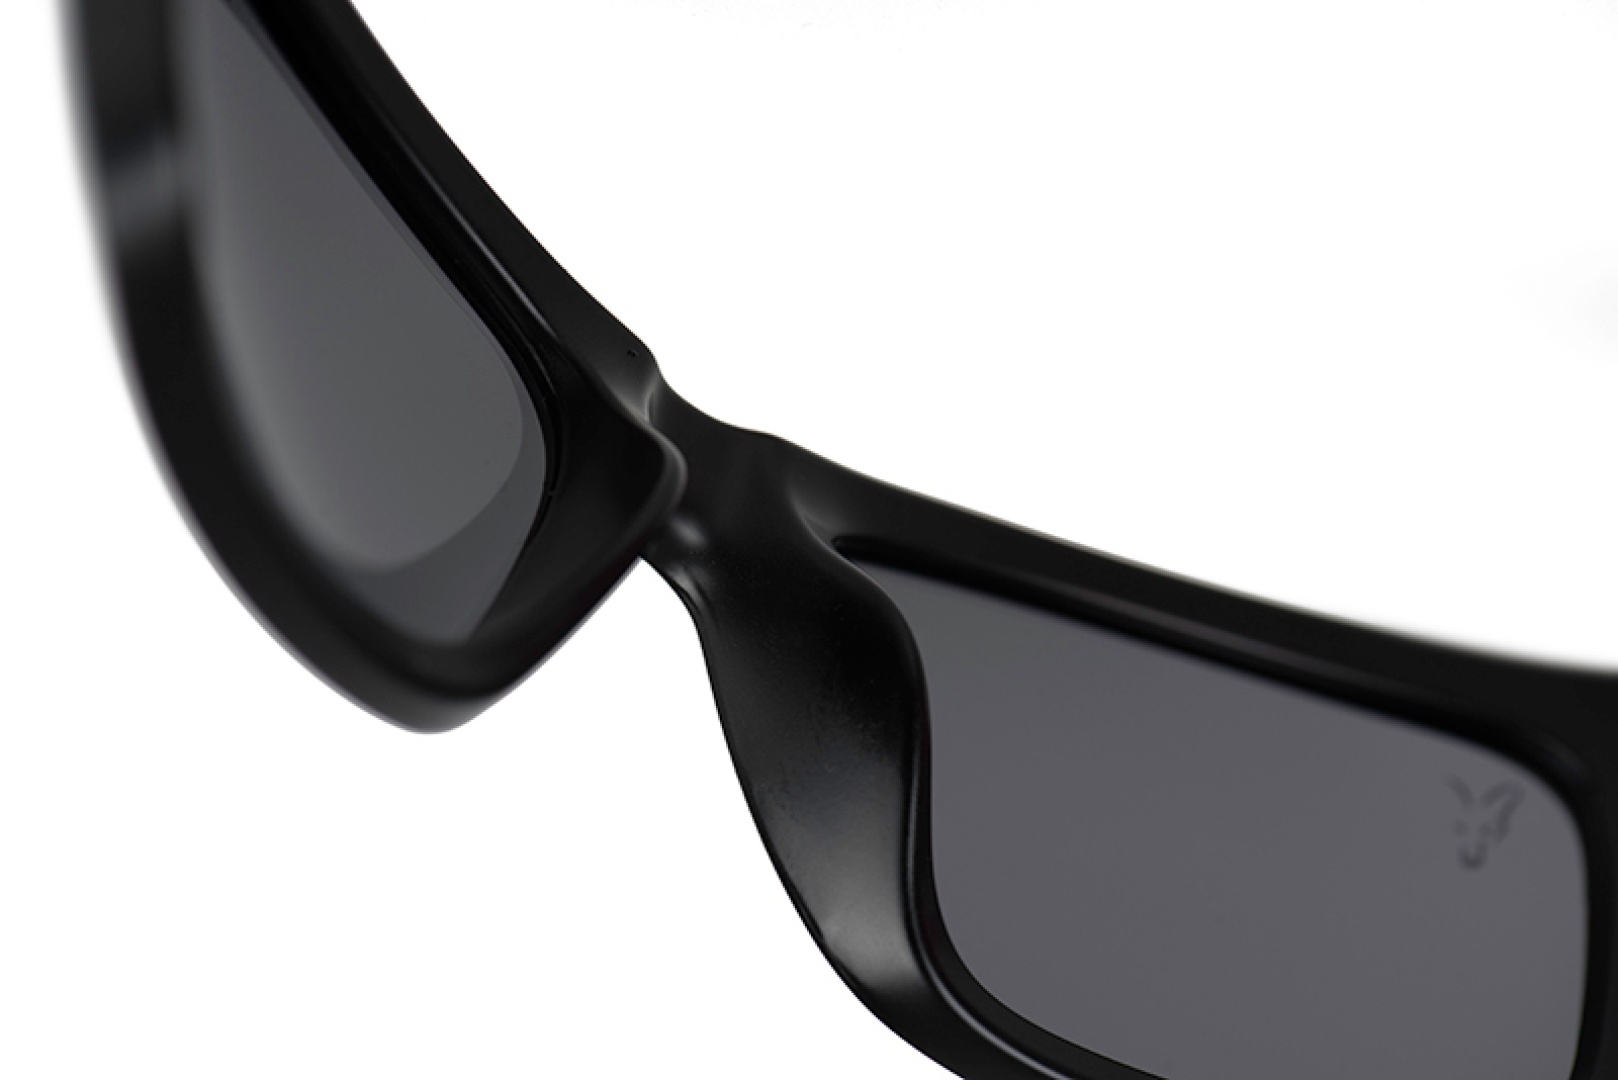 Fox Collection Wraps - Black & Orange Sunglasses - Grey Lense 